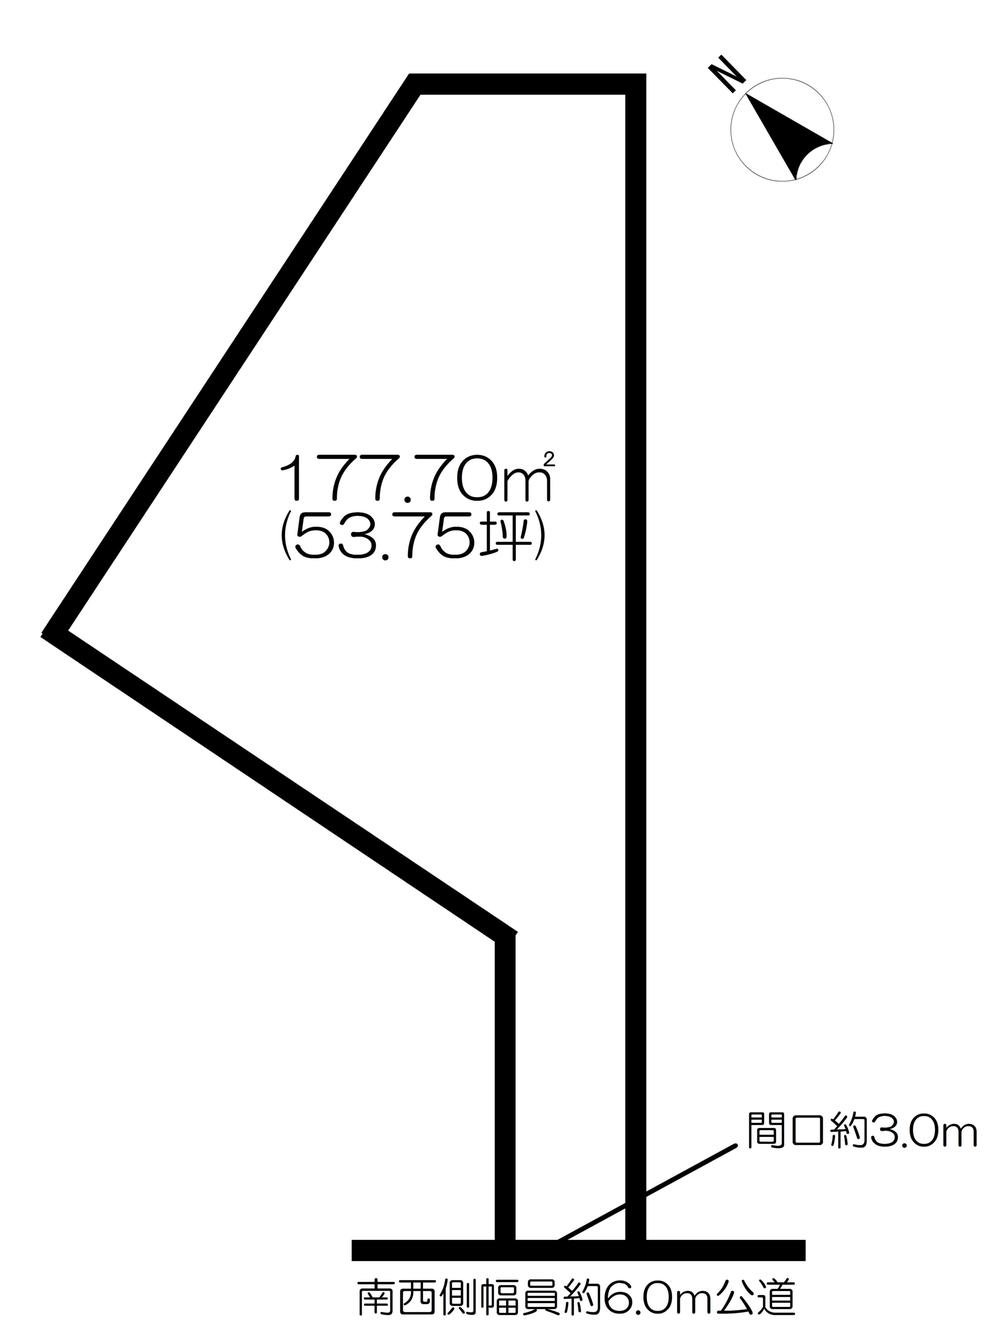 Compartment figure. Land price 15 million yen, Land area 177.7 sq m